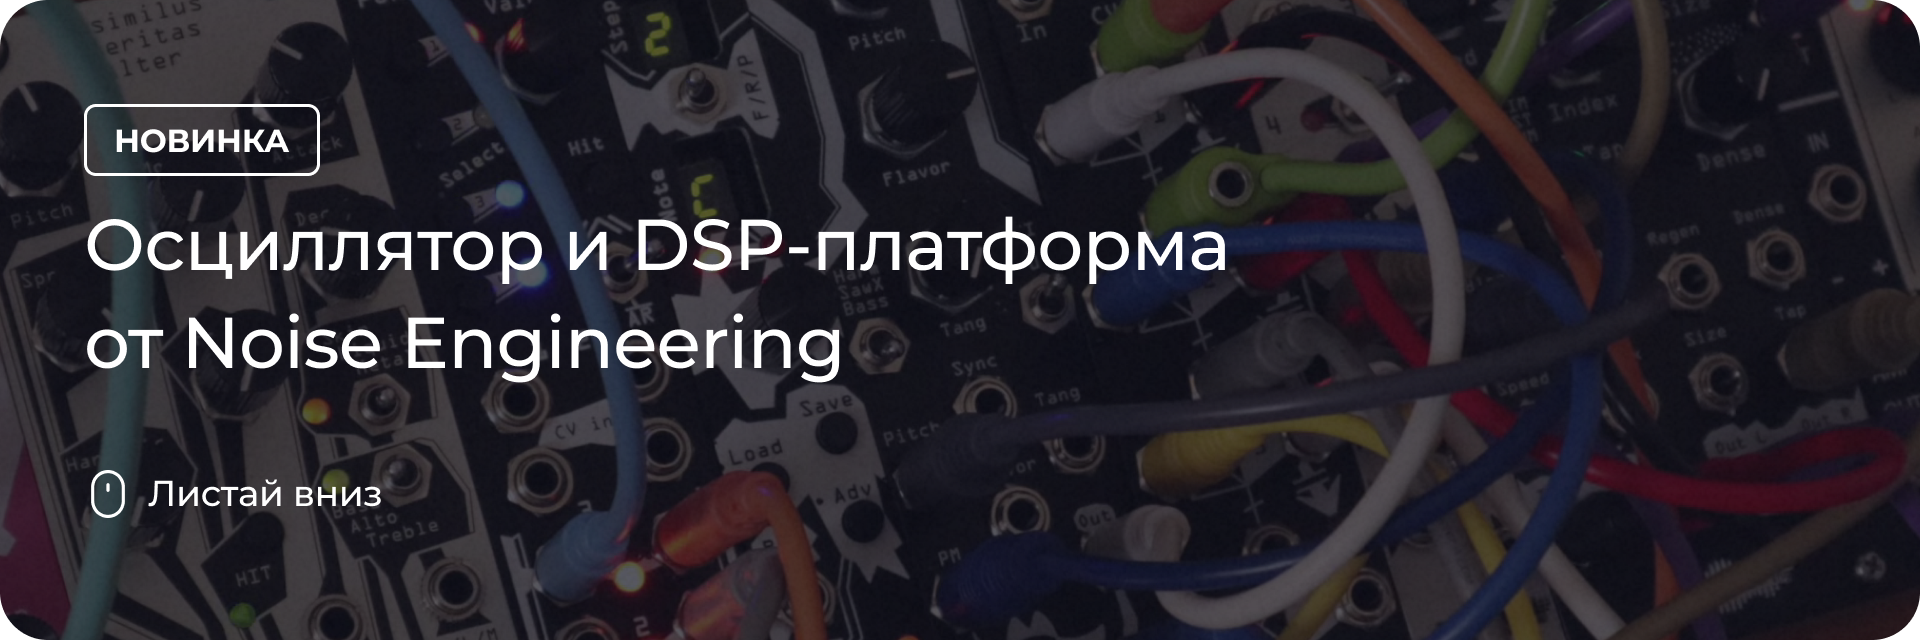 Осциллятор и DSP-платформа от Noise Engineering